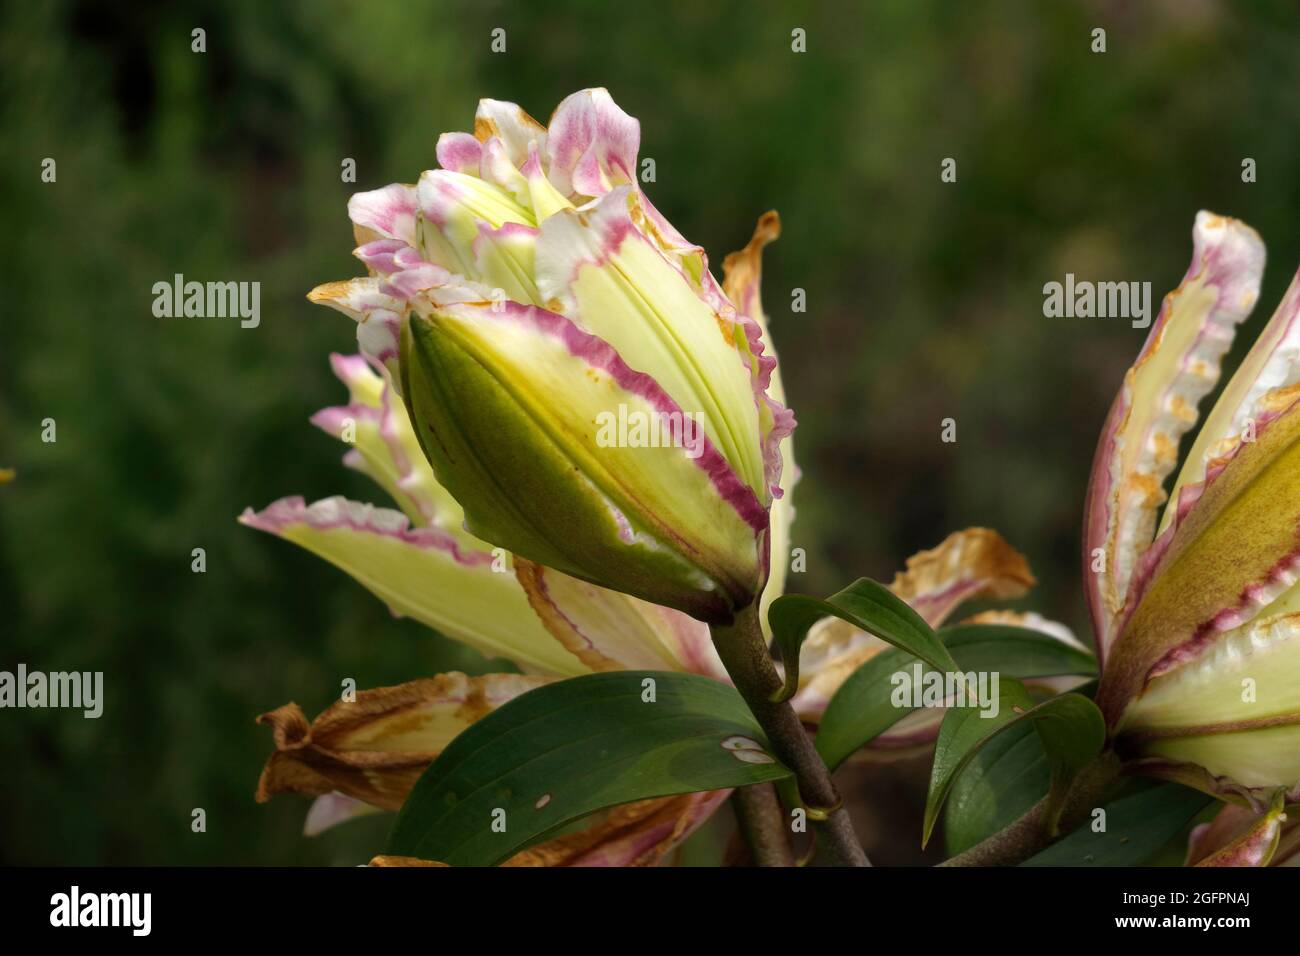 Plantar lirios dobles fotografías e imágenes de alta resolución - Alamy